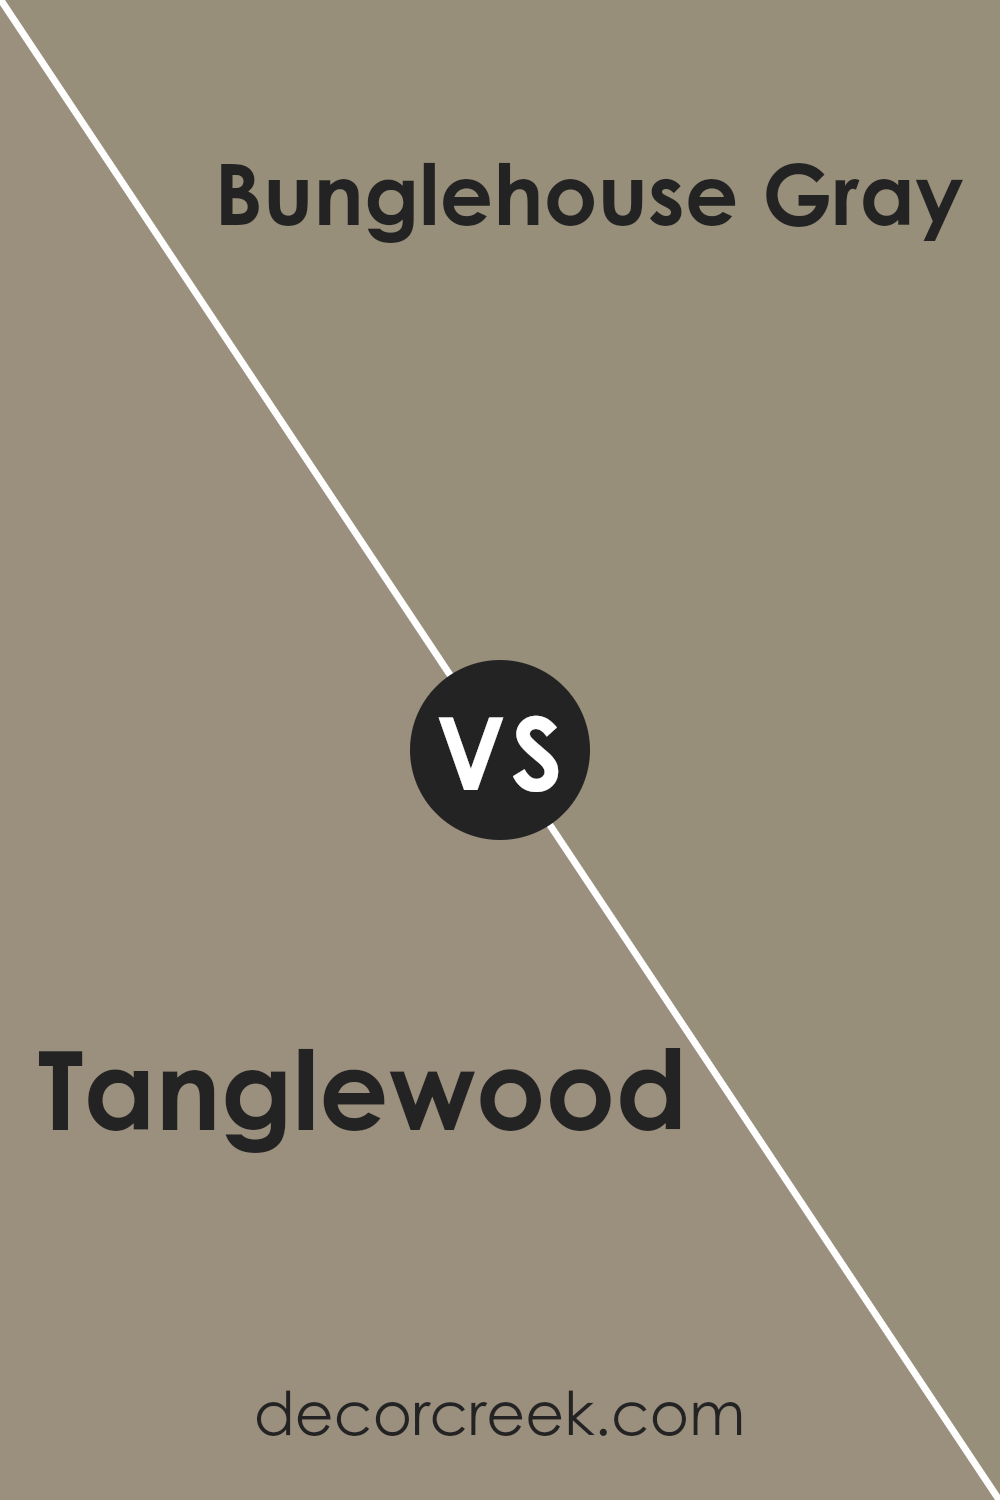 tanglewood_sw_9607_vs_bunglehouse_gray_sw_2845